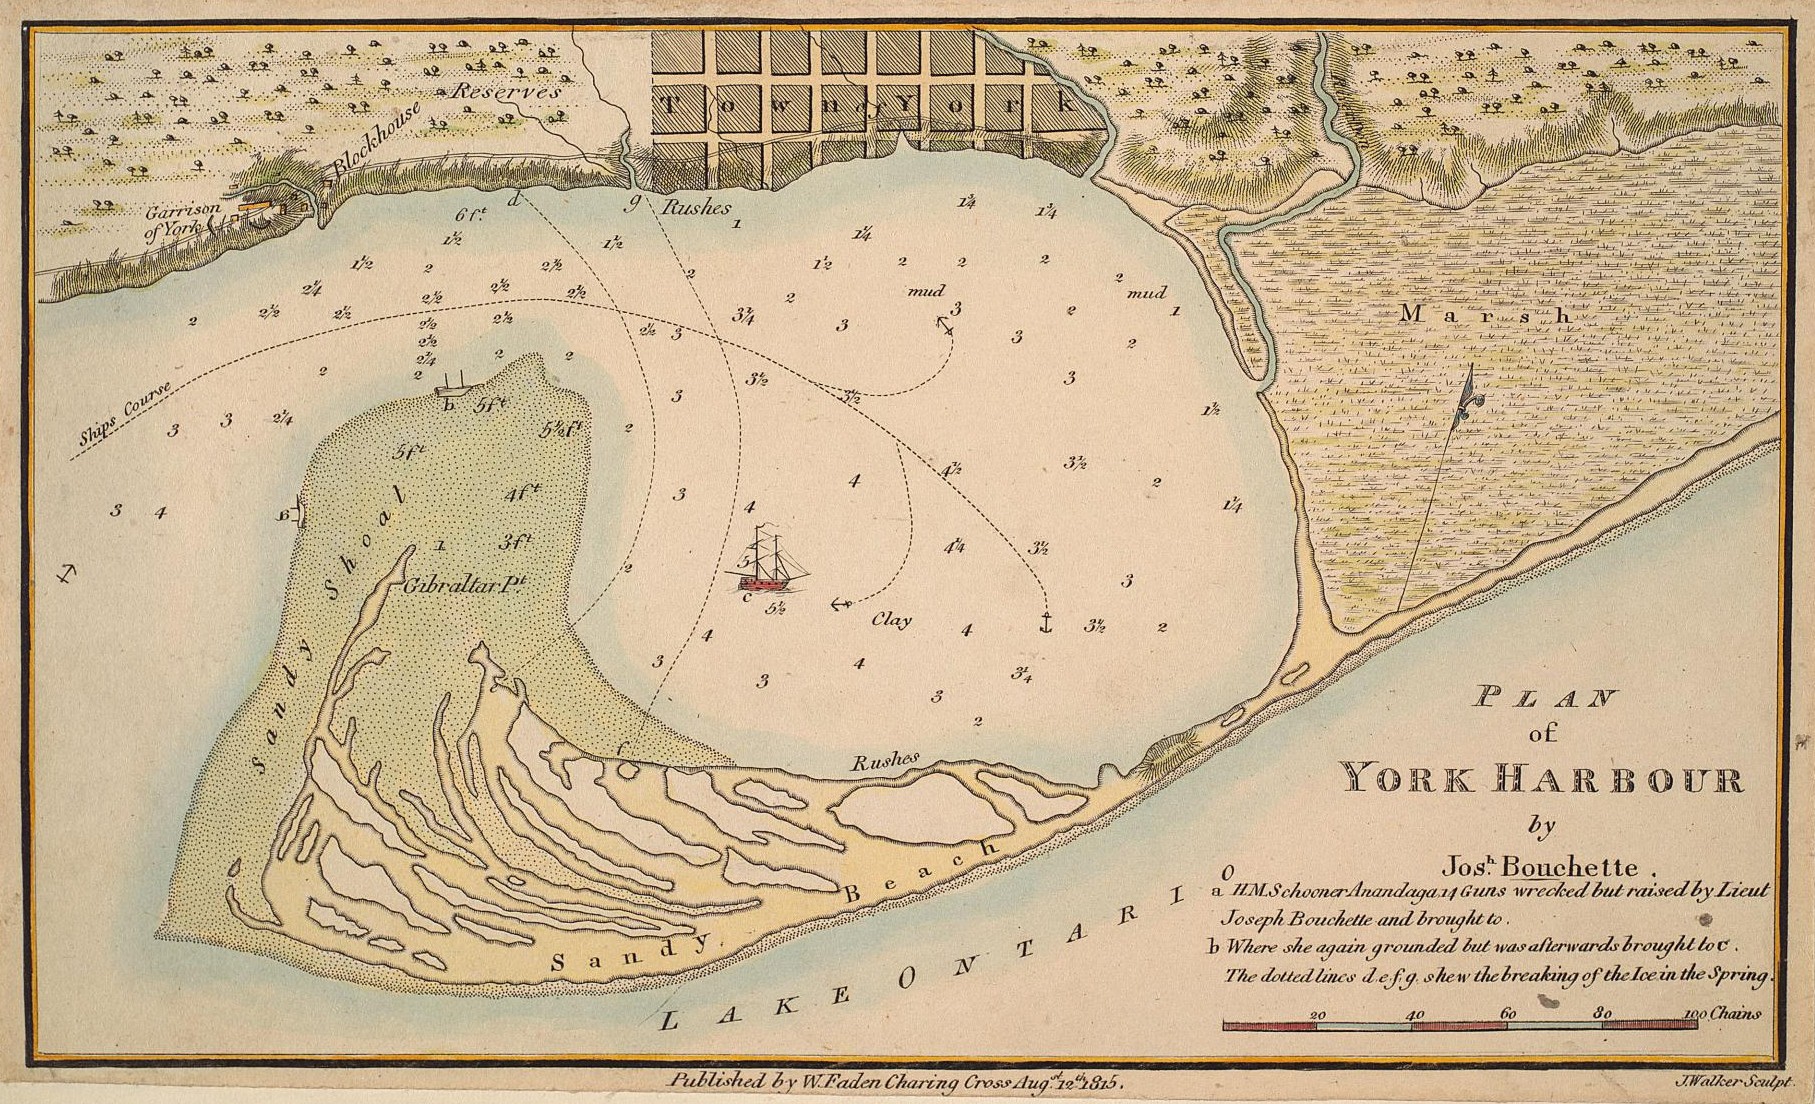 An 1815 Plan of York Harbour